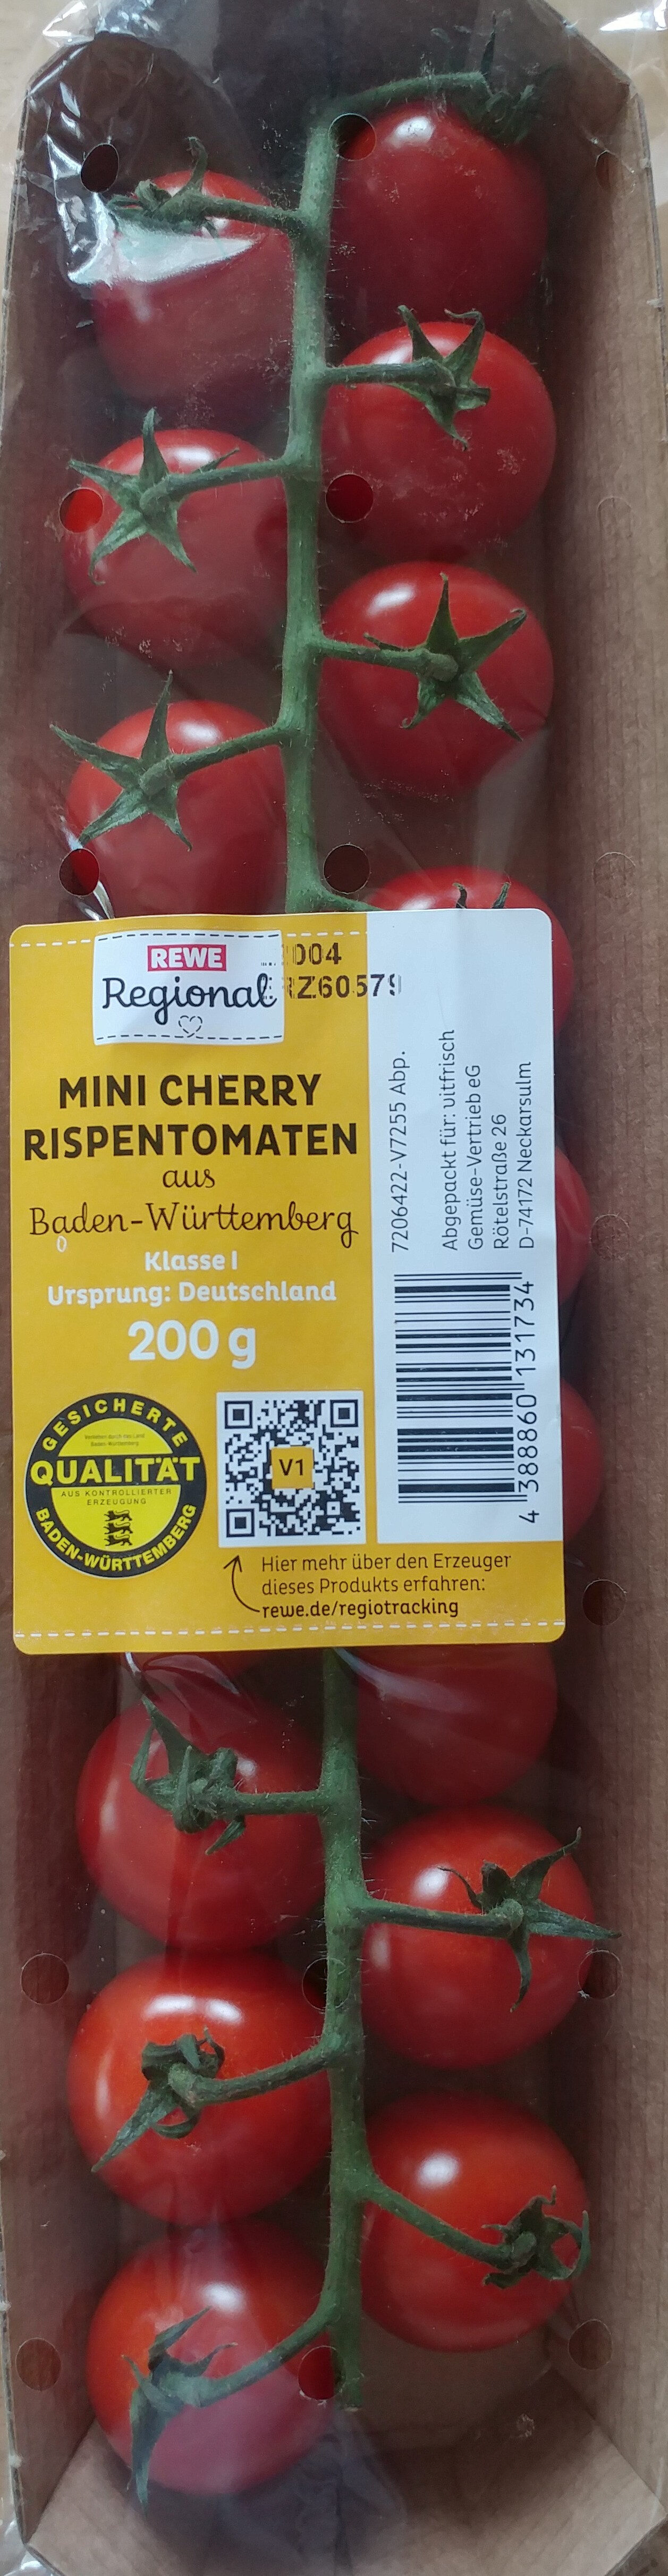 Mini Cherry Rispentomaten aus Deutschland - Product - de